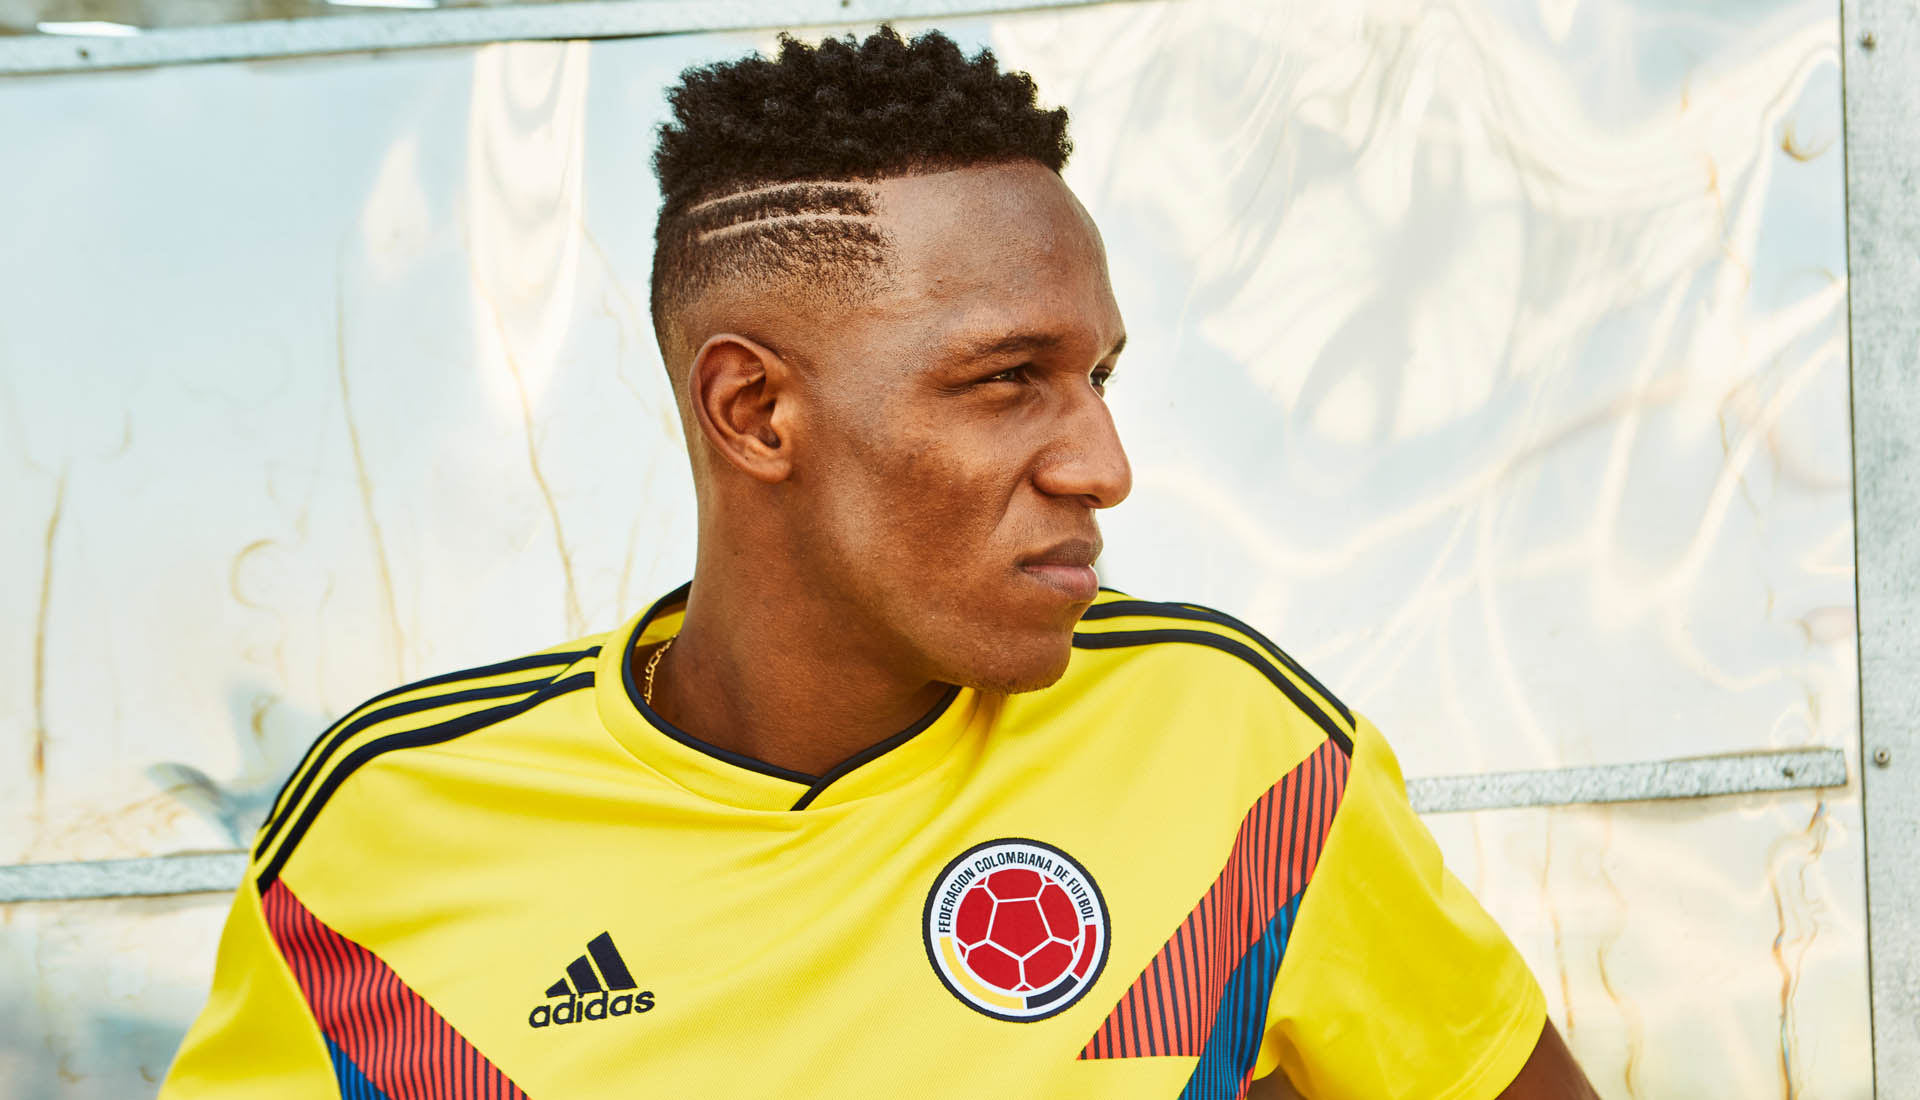 Colombia World Cup Shirt 2018 adidas SoccerBible_0000_MINA_12883.jpg